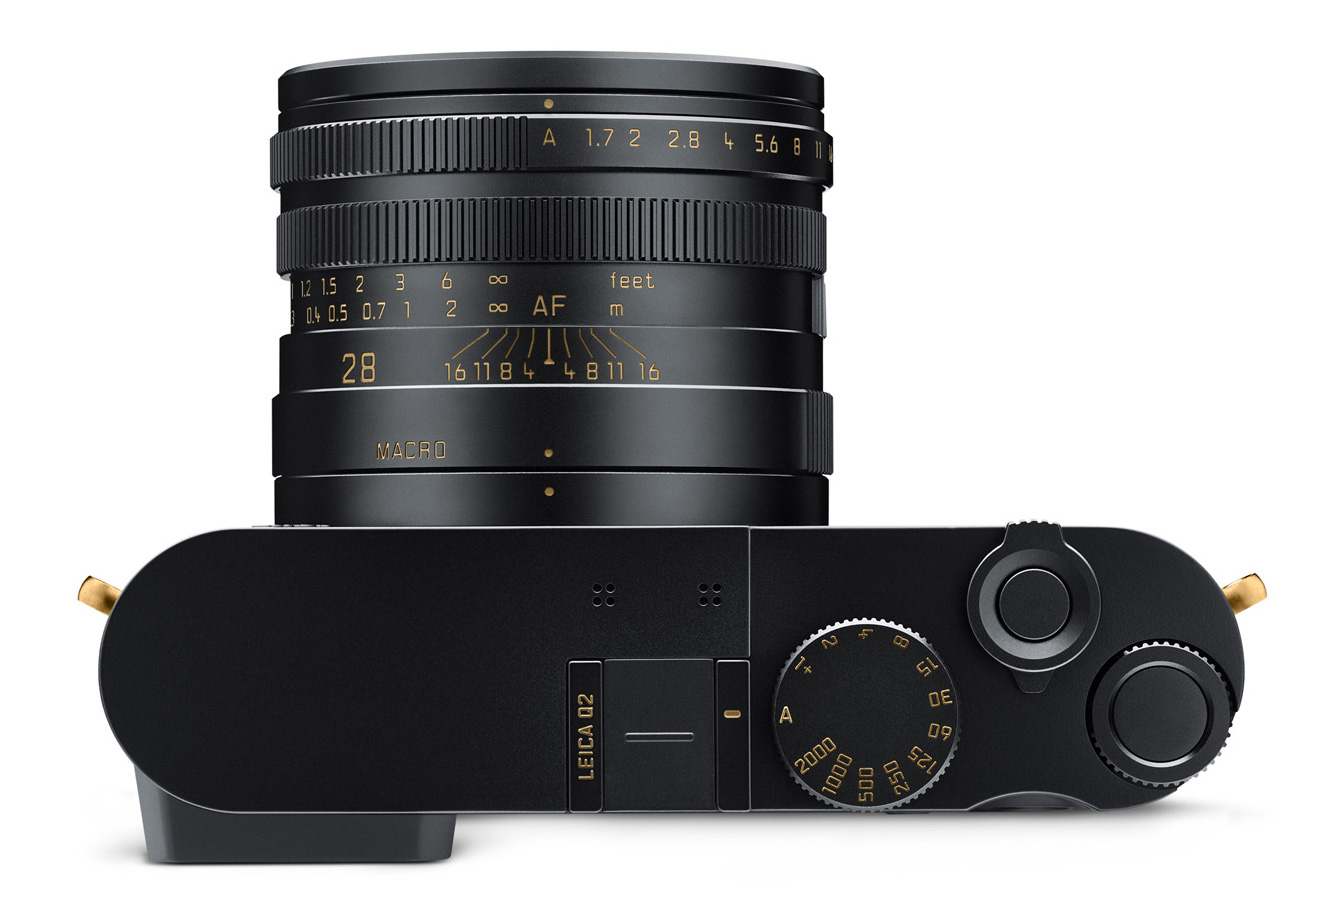 New Leica Q2 Daniel Craig X Greg Williams Limited Edition Camera Leaked Online Leica Rumors